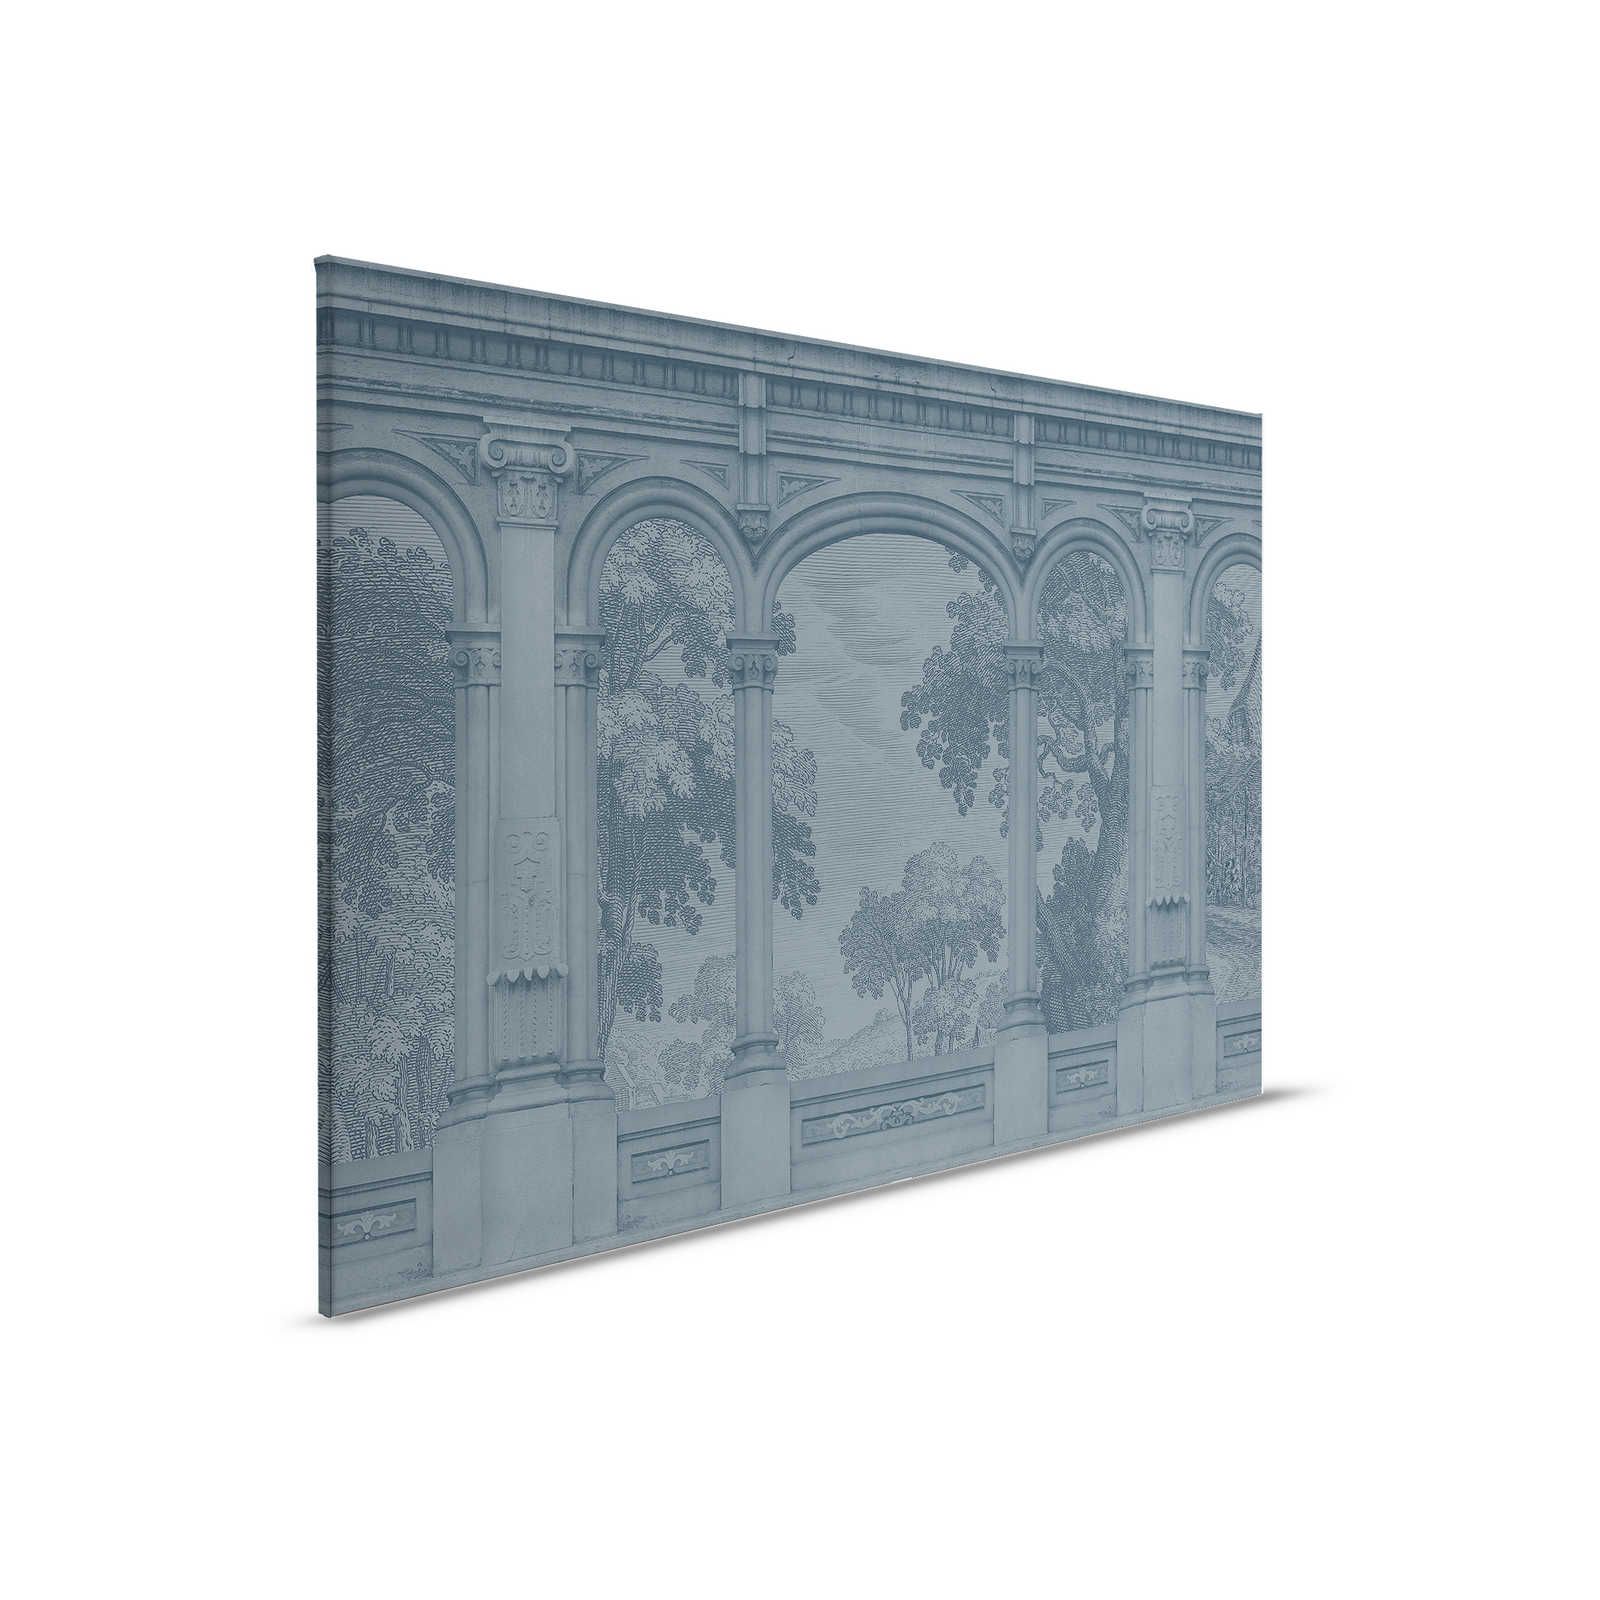         Roma 4 - Canvas painting architecture classic design in anthracite - 0,90 m x 0,60 m
    